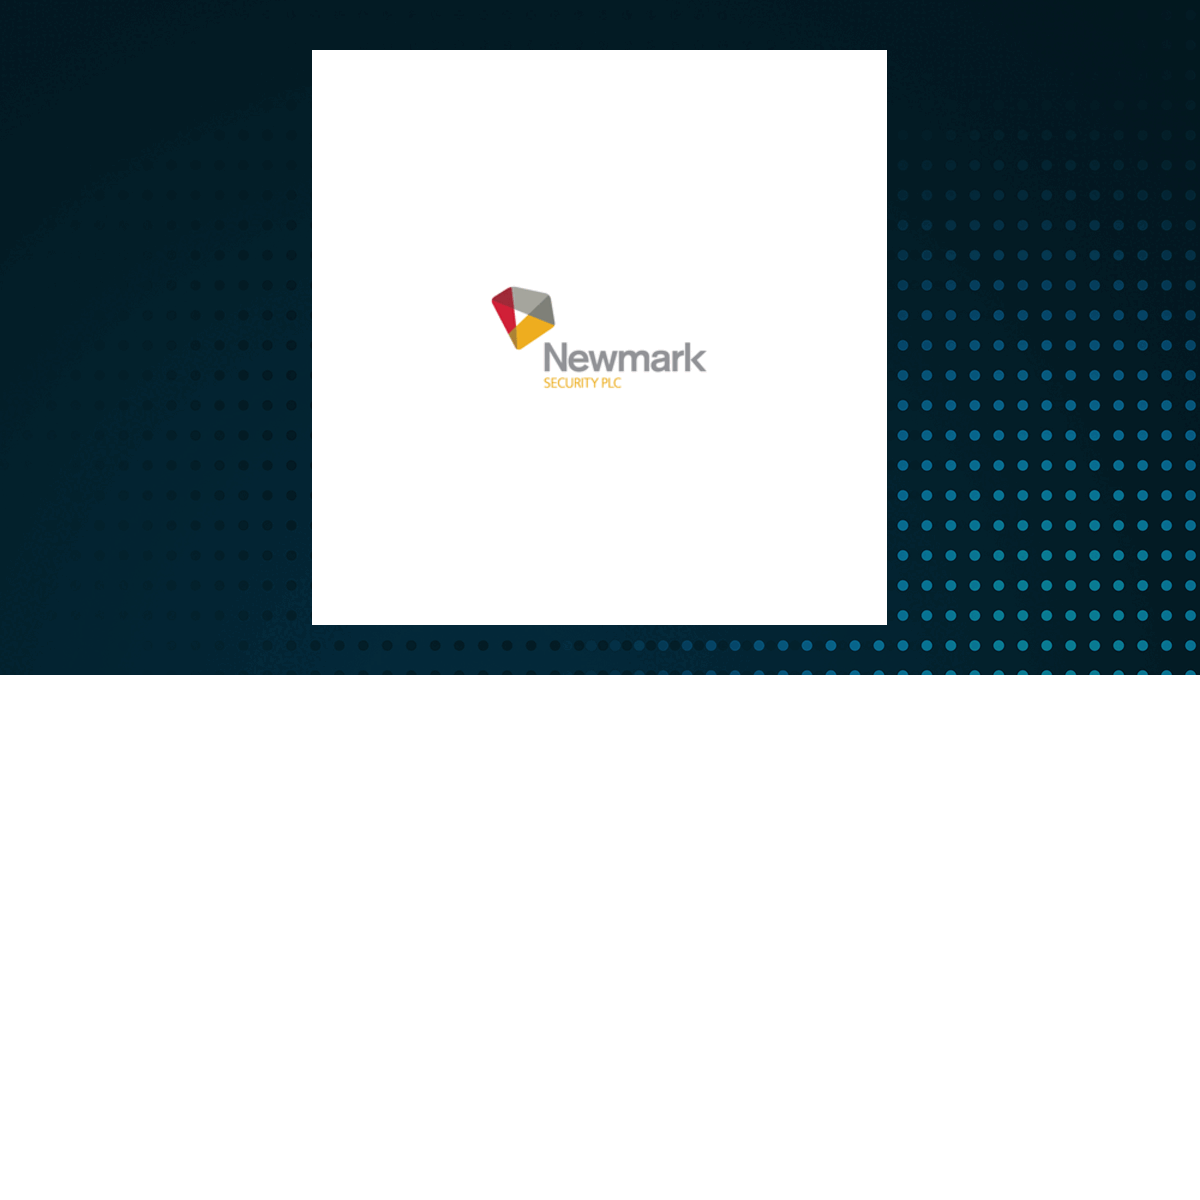 Newmark Security logo